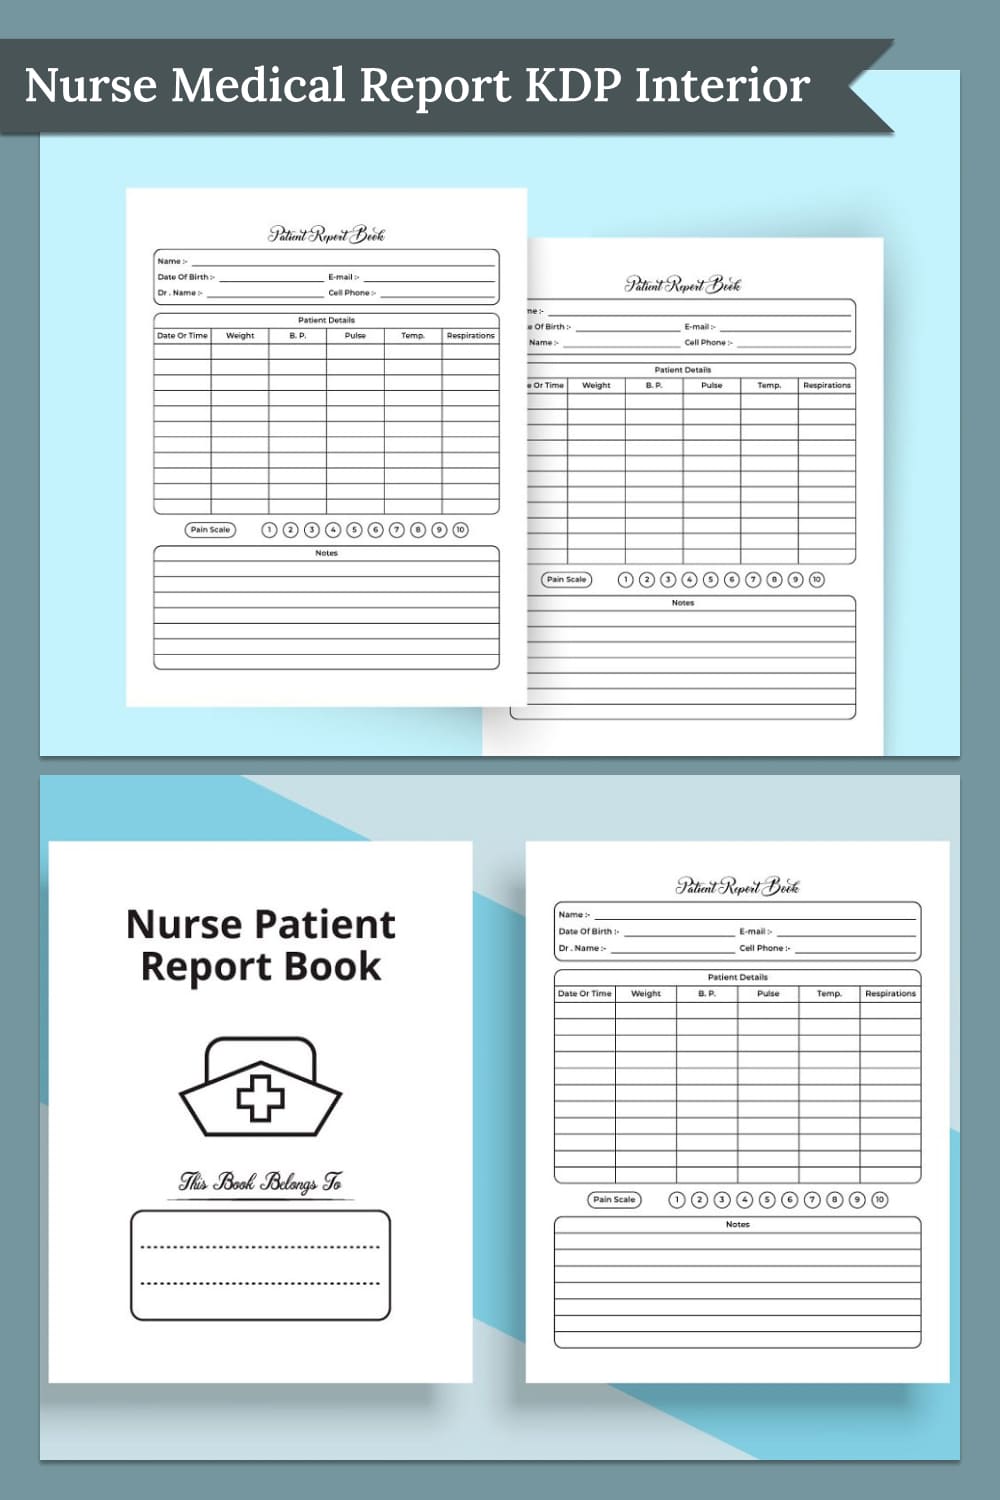 Nurse medical report KDP interior - pinterest image preview.